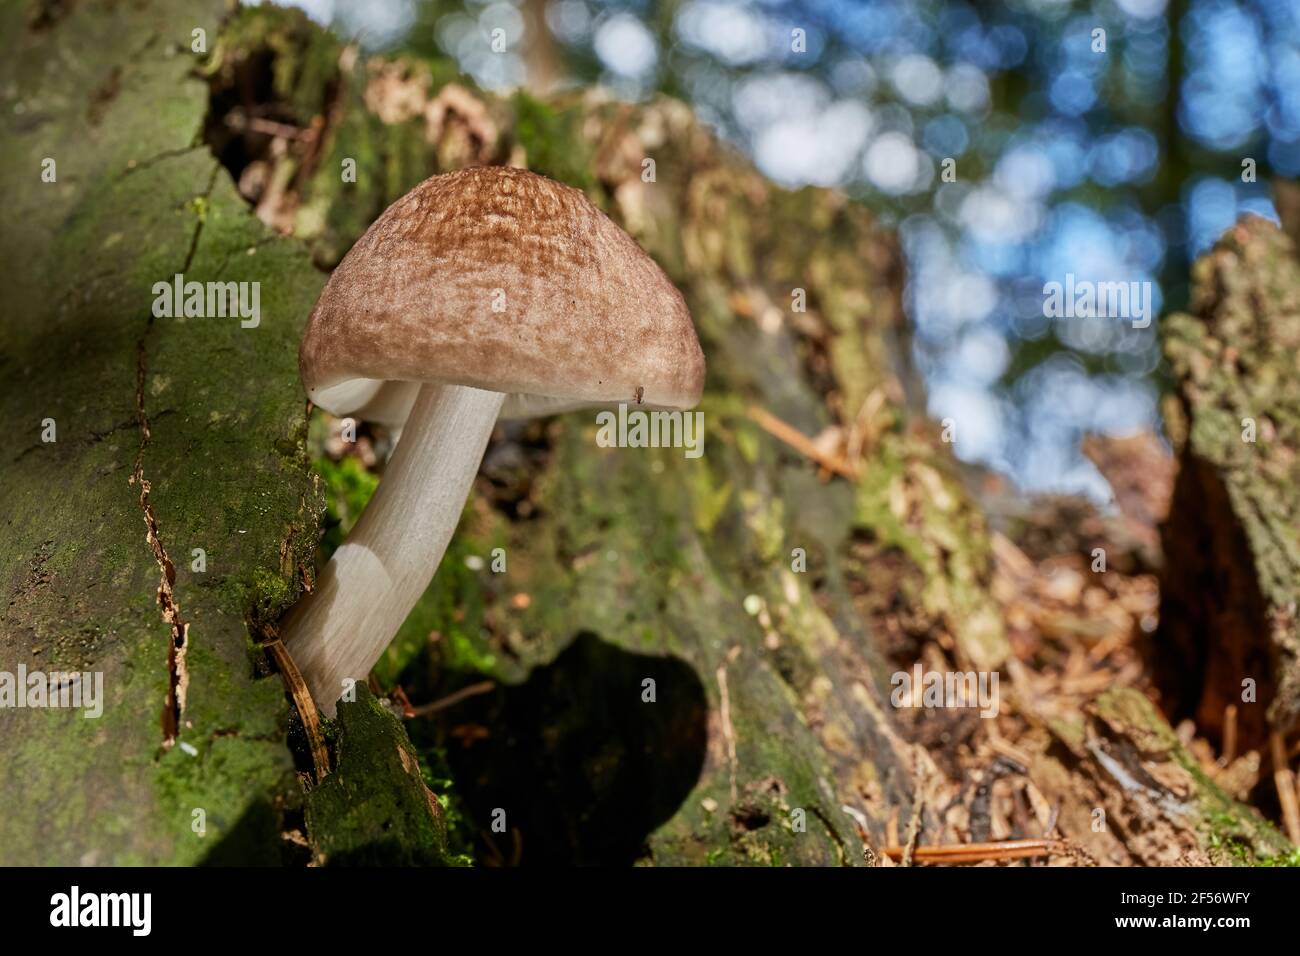 Pluteus depauperatu - ungenießbare Pilze. Pilz in der natürlichen Umgebung. Stockfoto